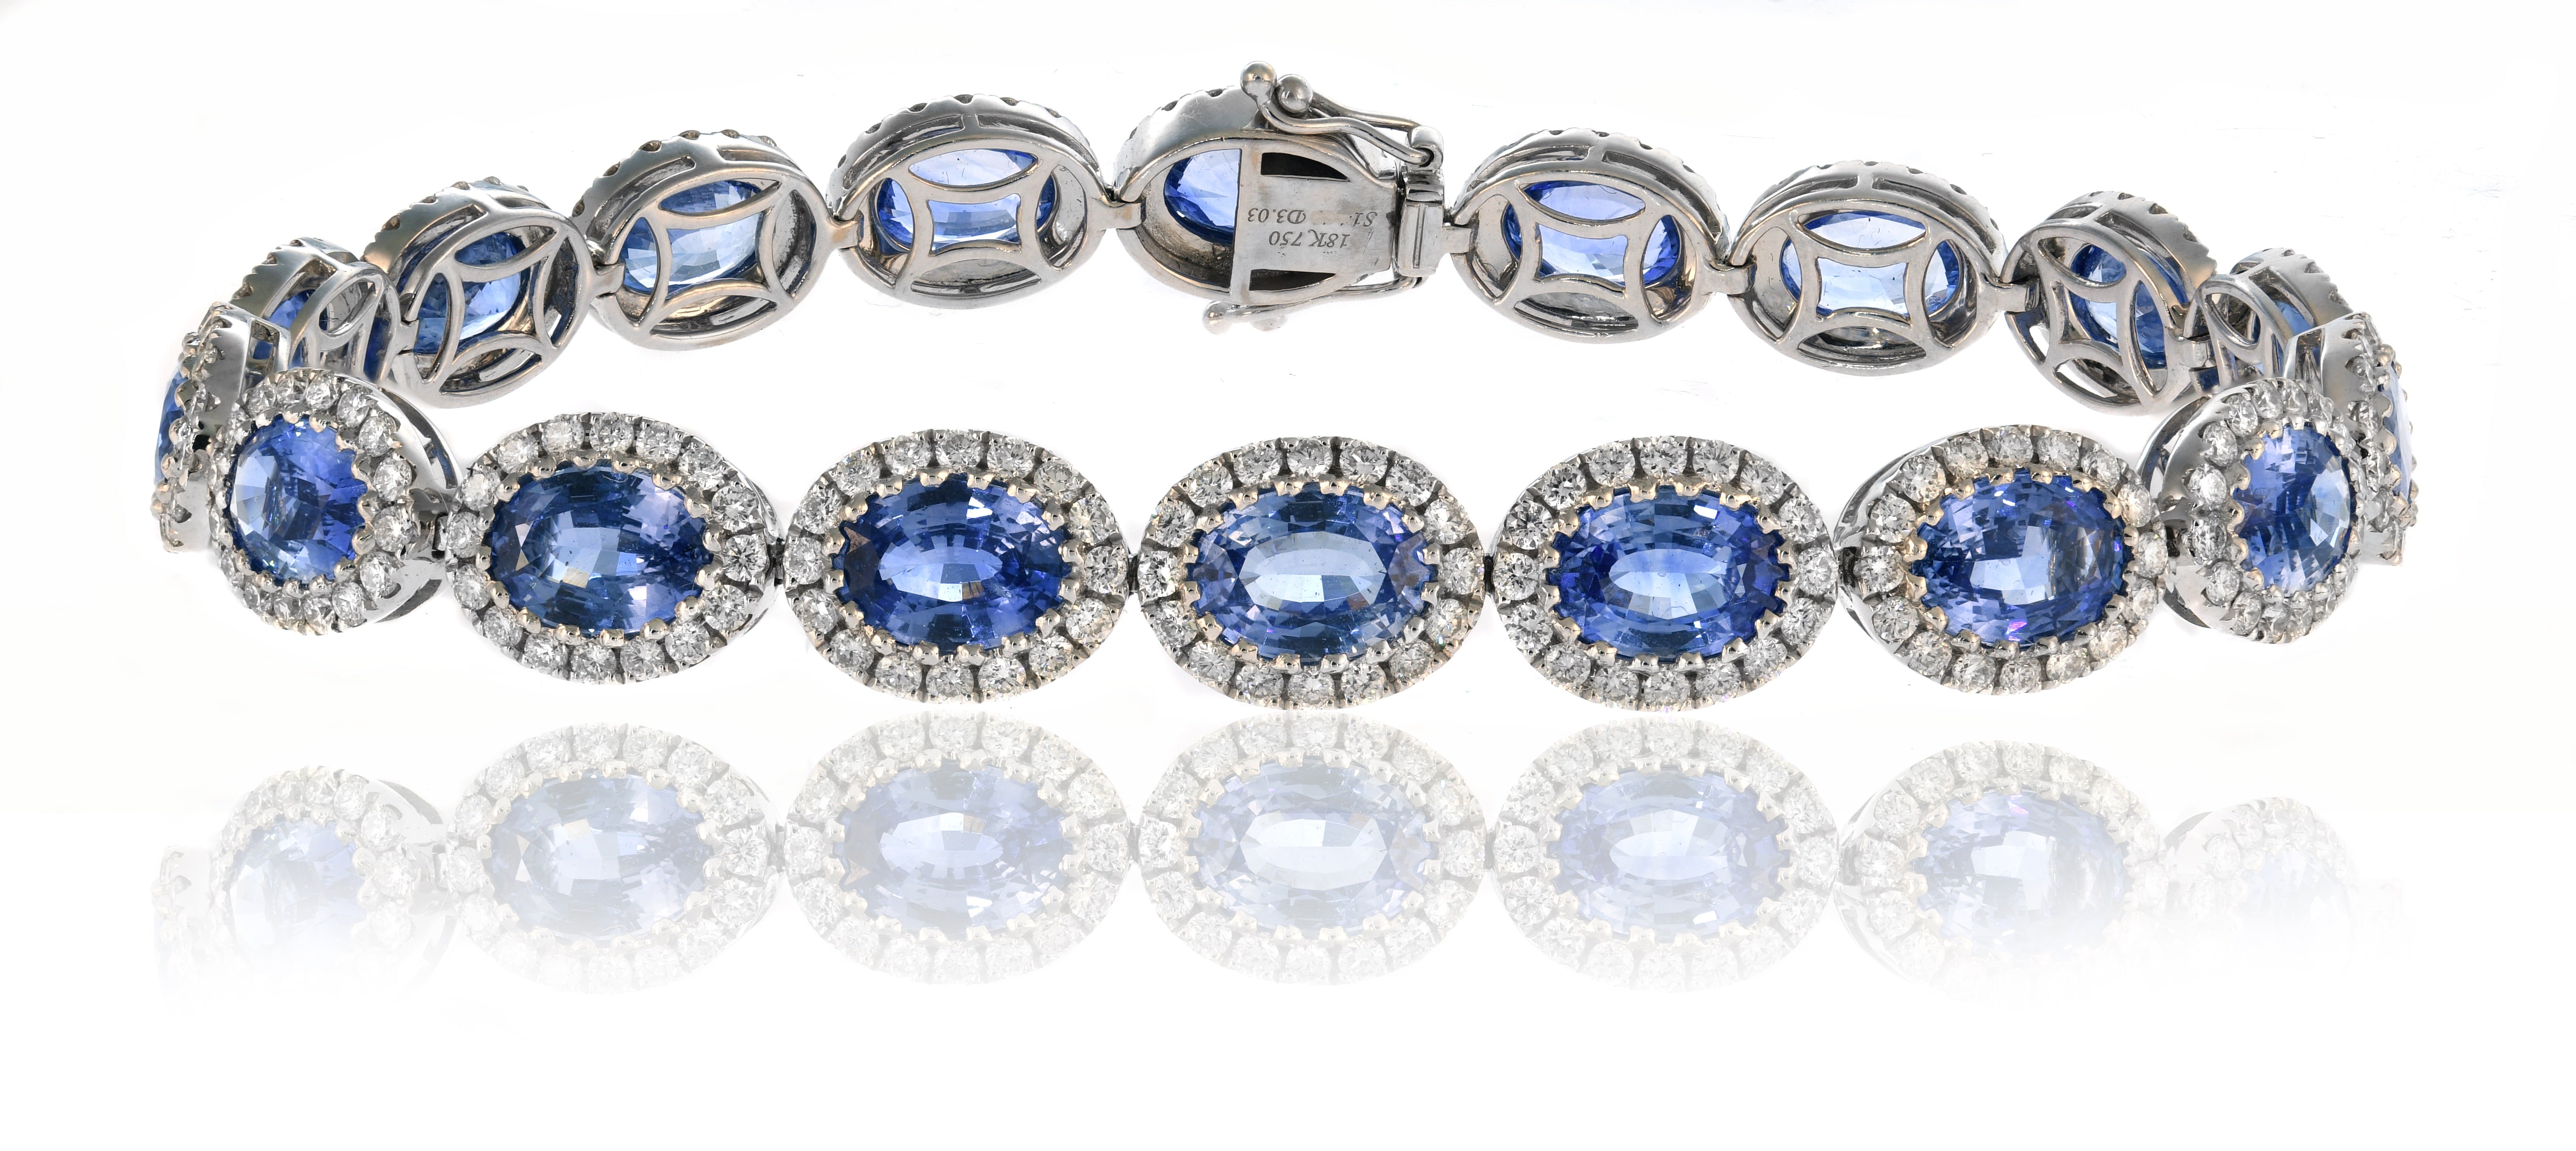 Bracelet - Oval Cut Sapphire Diamond Halo Bracelet